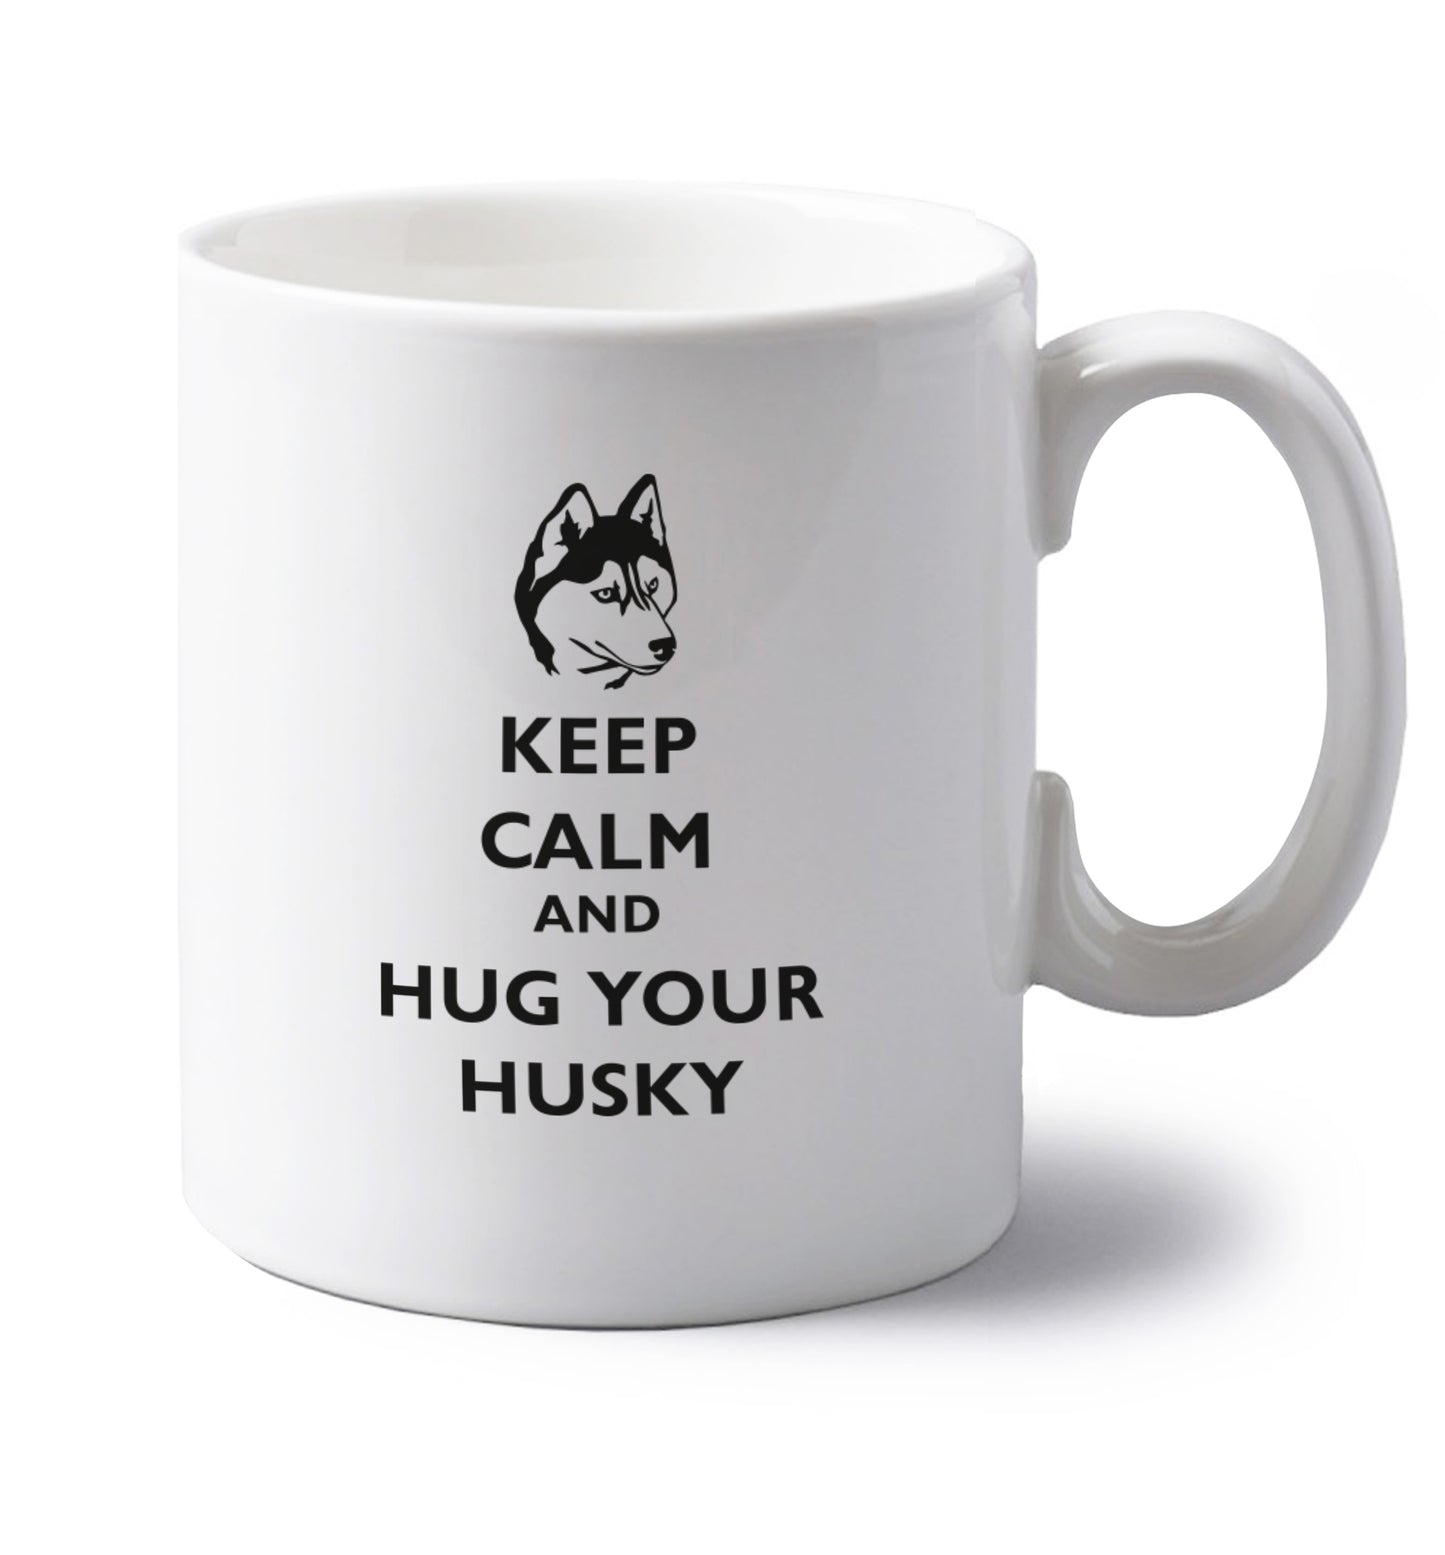 Keep calm and hug your husky left handed white ceramic mug 